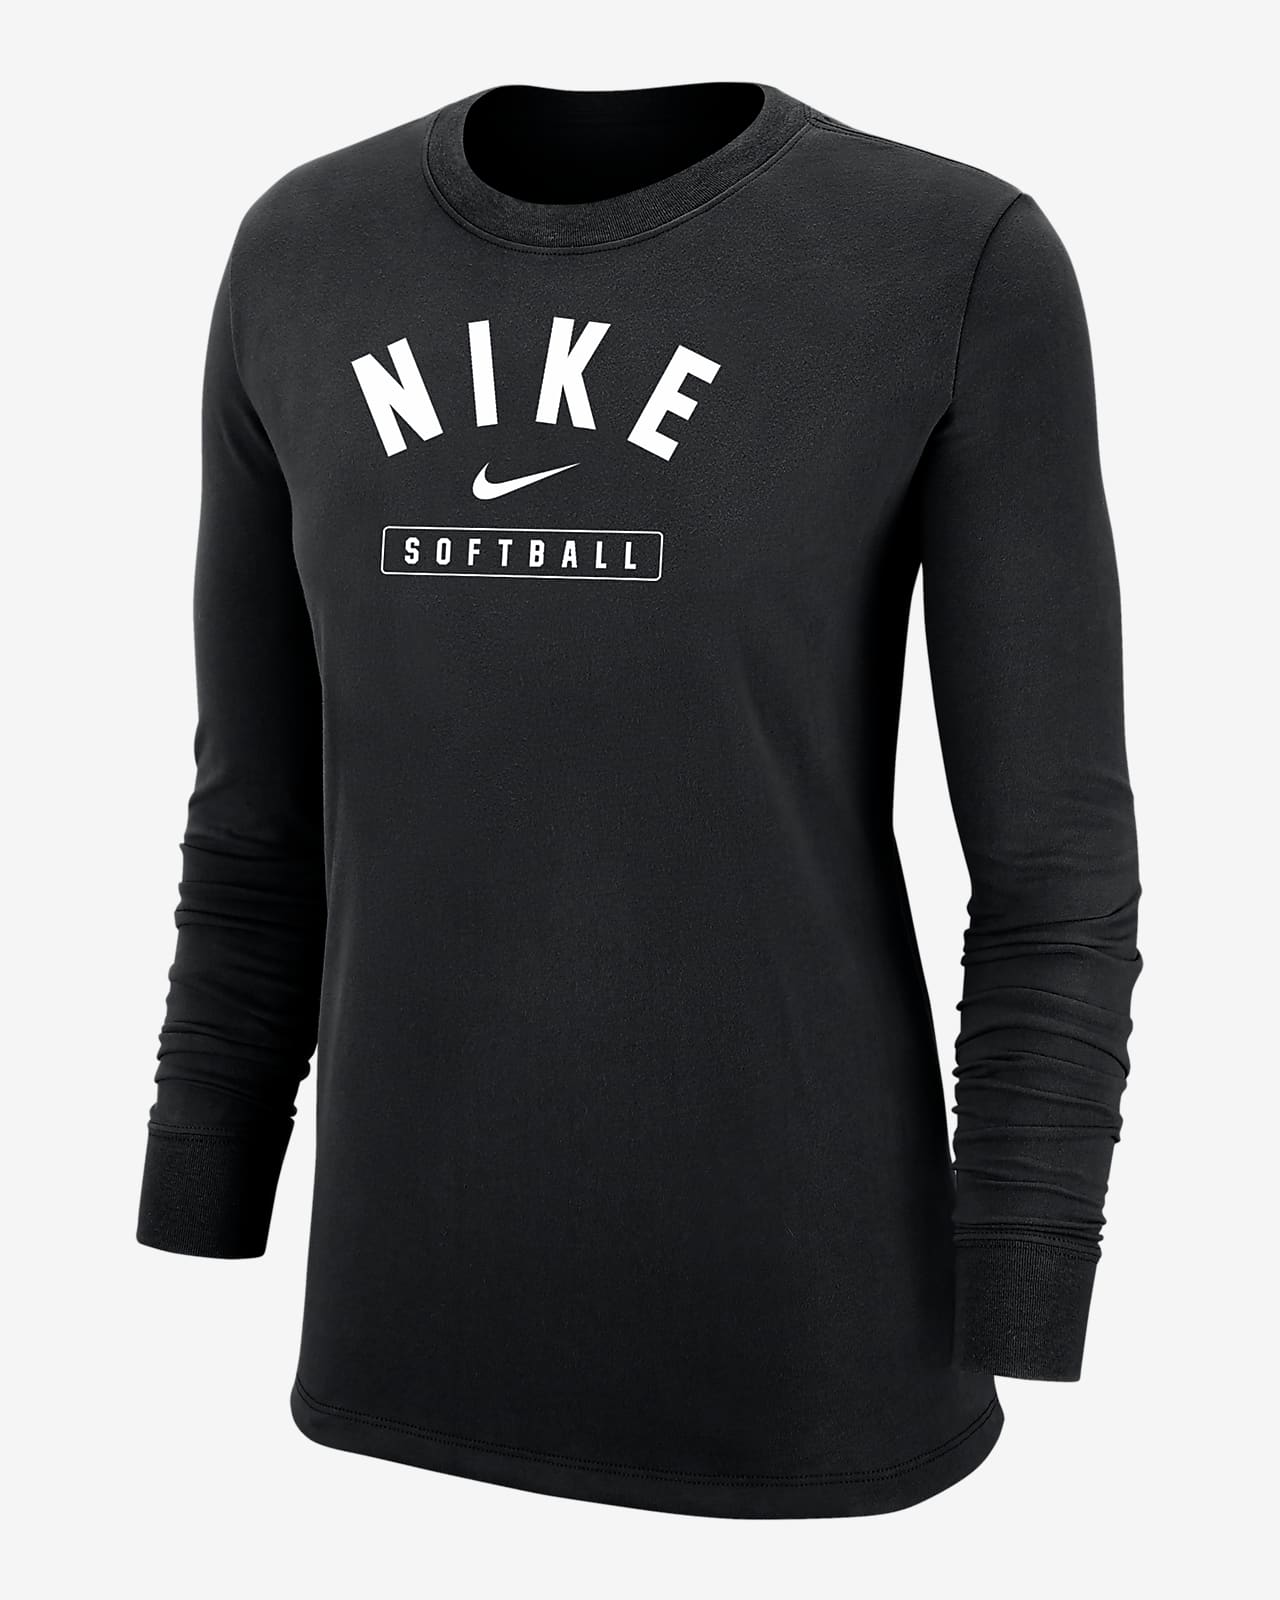 Nike Softball Women's Long-Sleeve T-Shirt